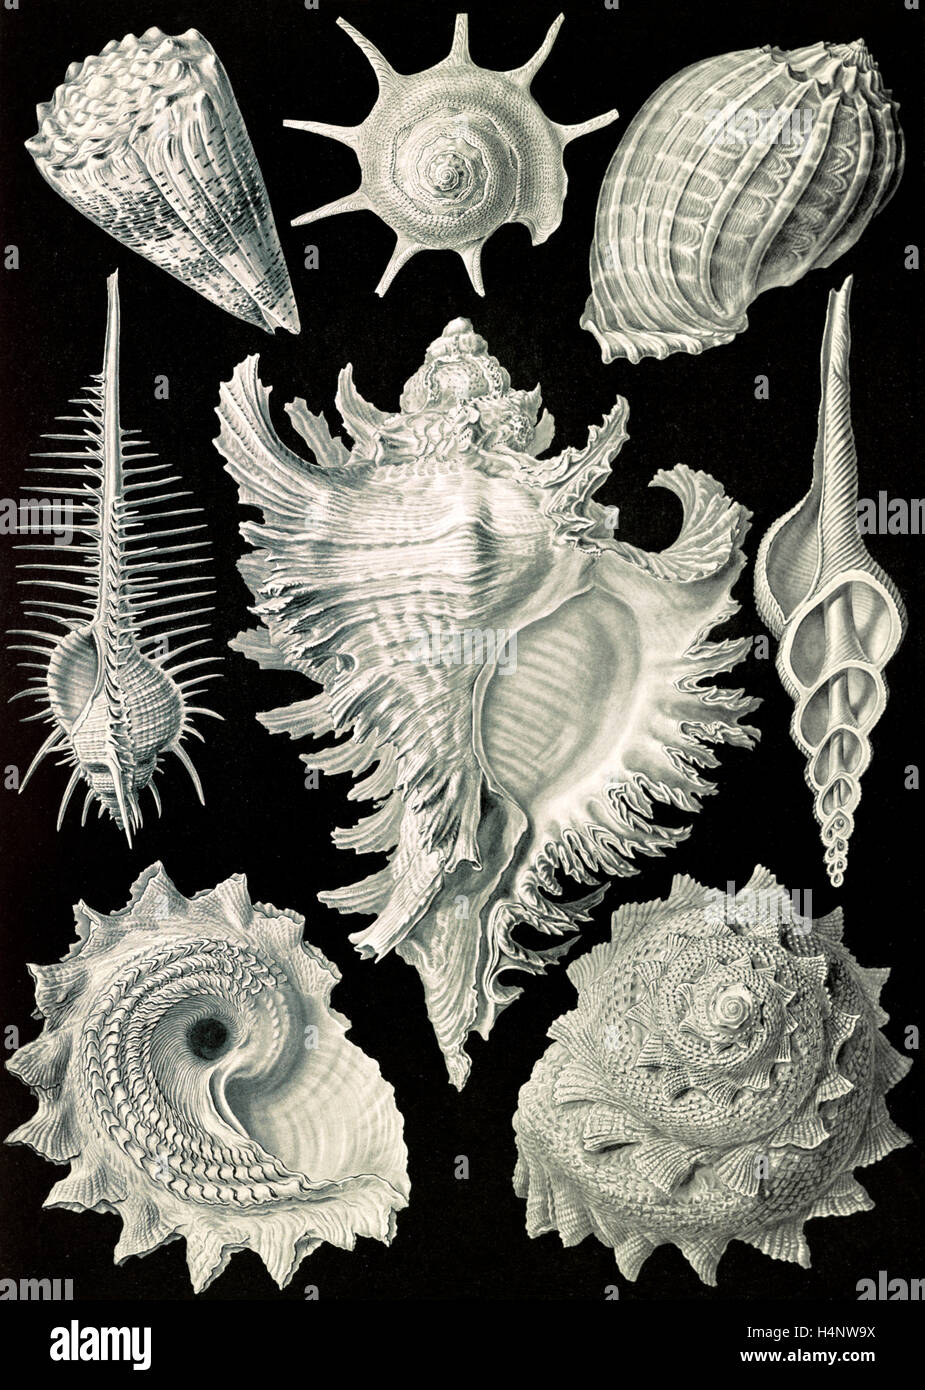 L'illustration montre les escargots aquatiques et terrestres. Prosobranchia. - Dorderkiemen-Schnecken, 1 : impression photomécanique Banque D'Images